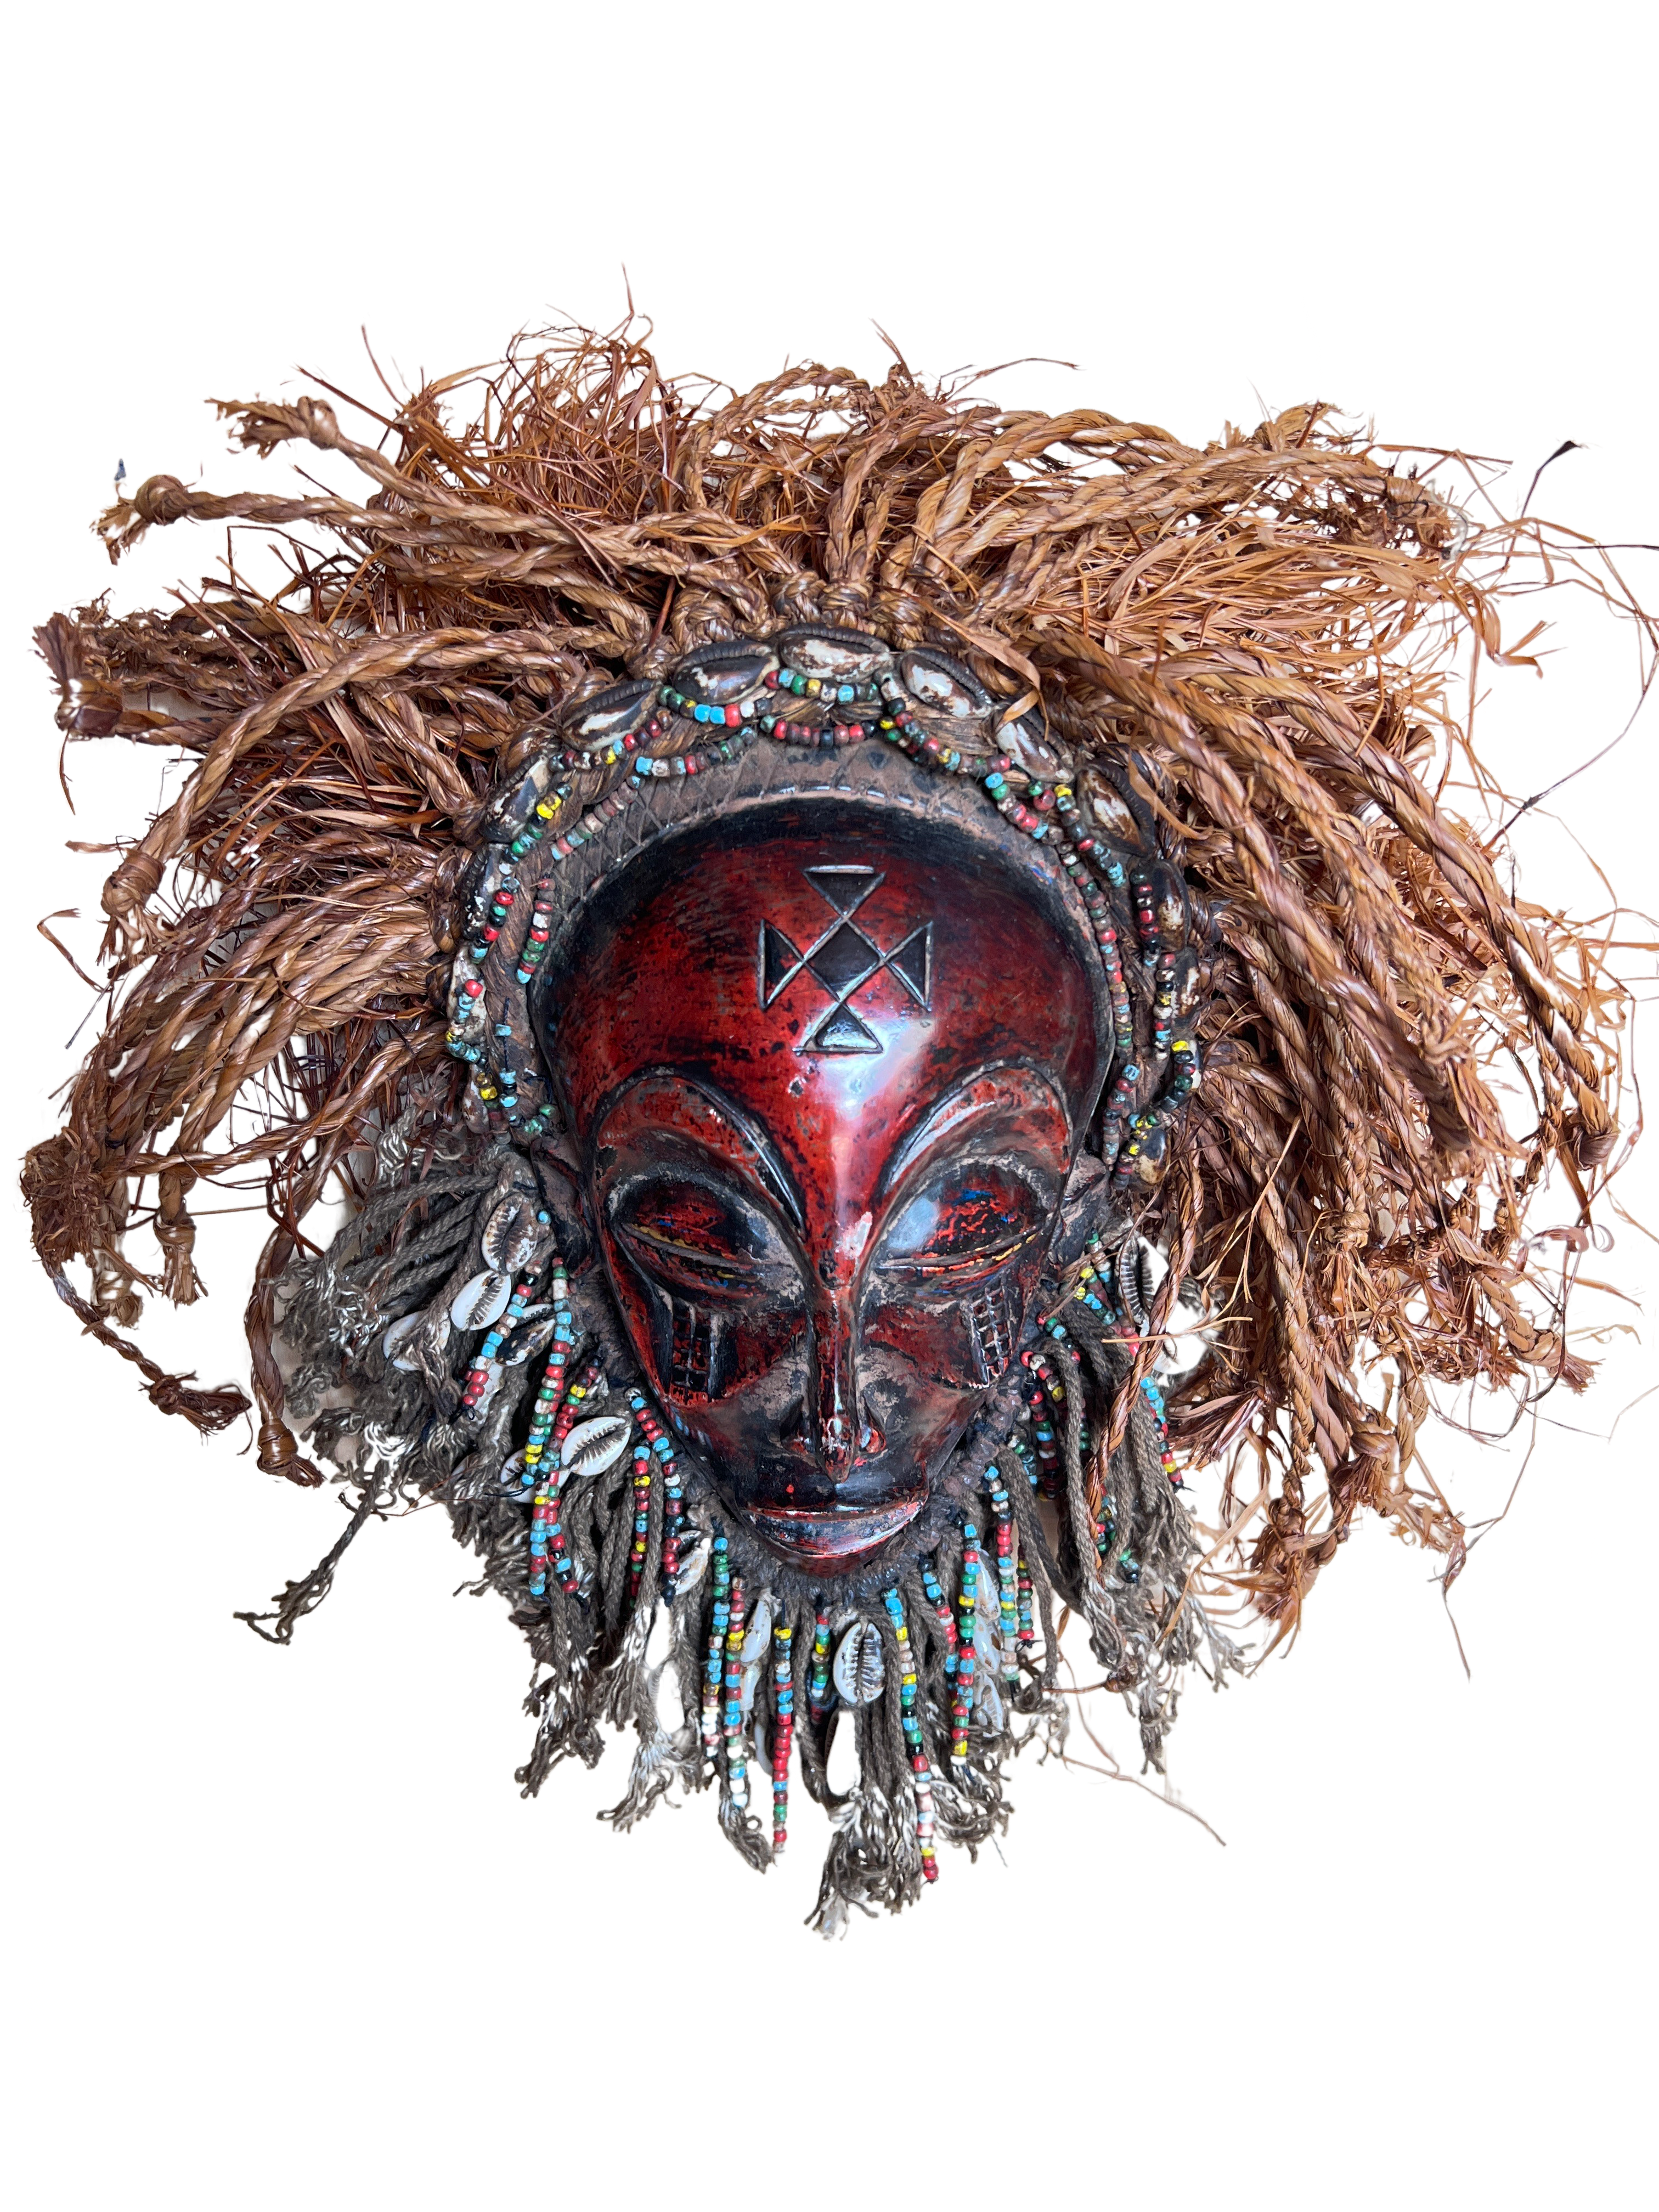 Chokwe Tribe Mask